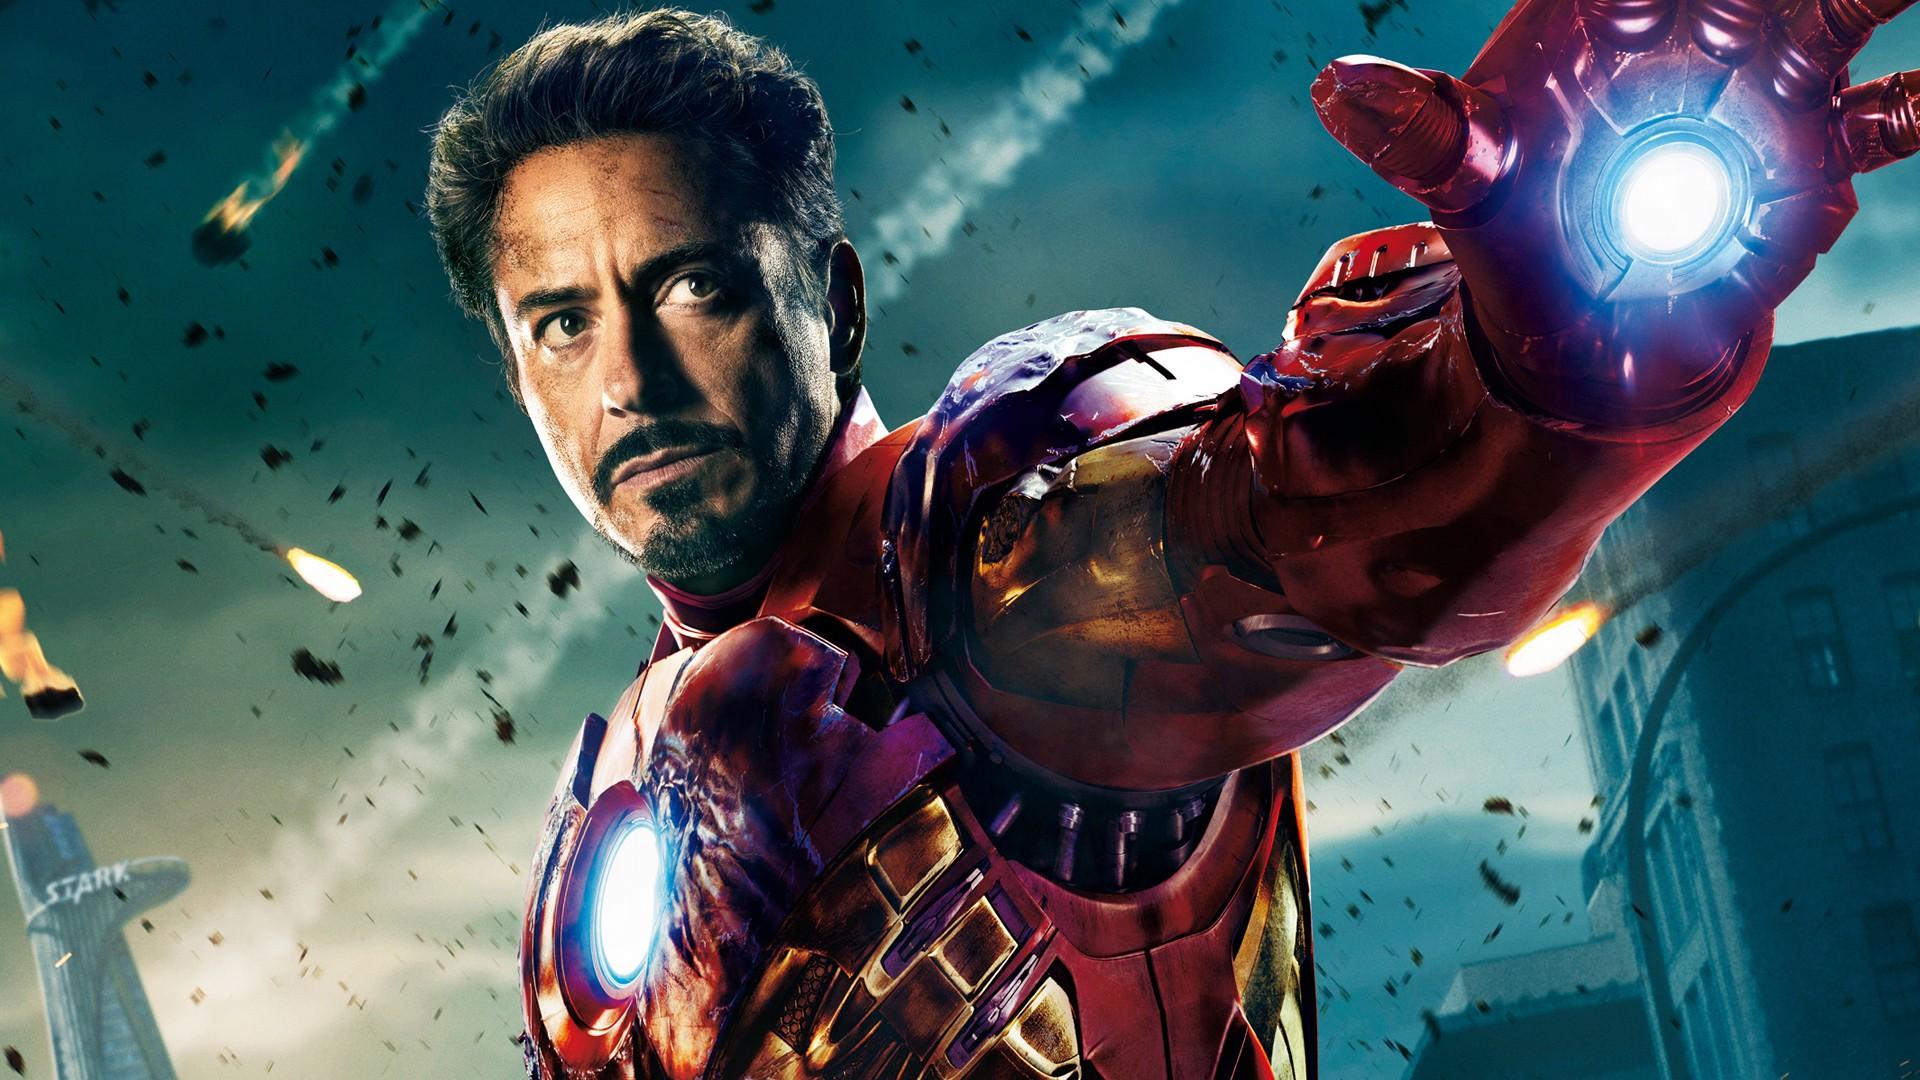 Robert Downey Jr. as Tony Stark Iron Man in Avengers